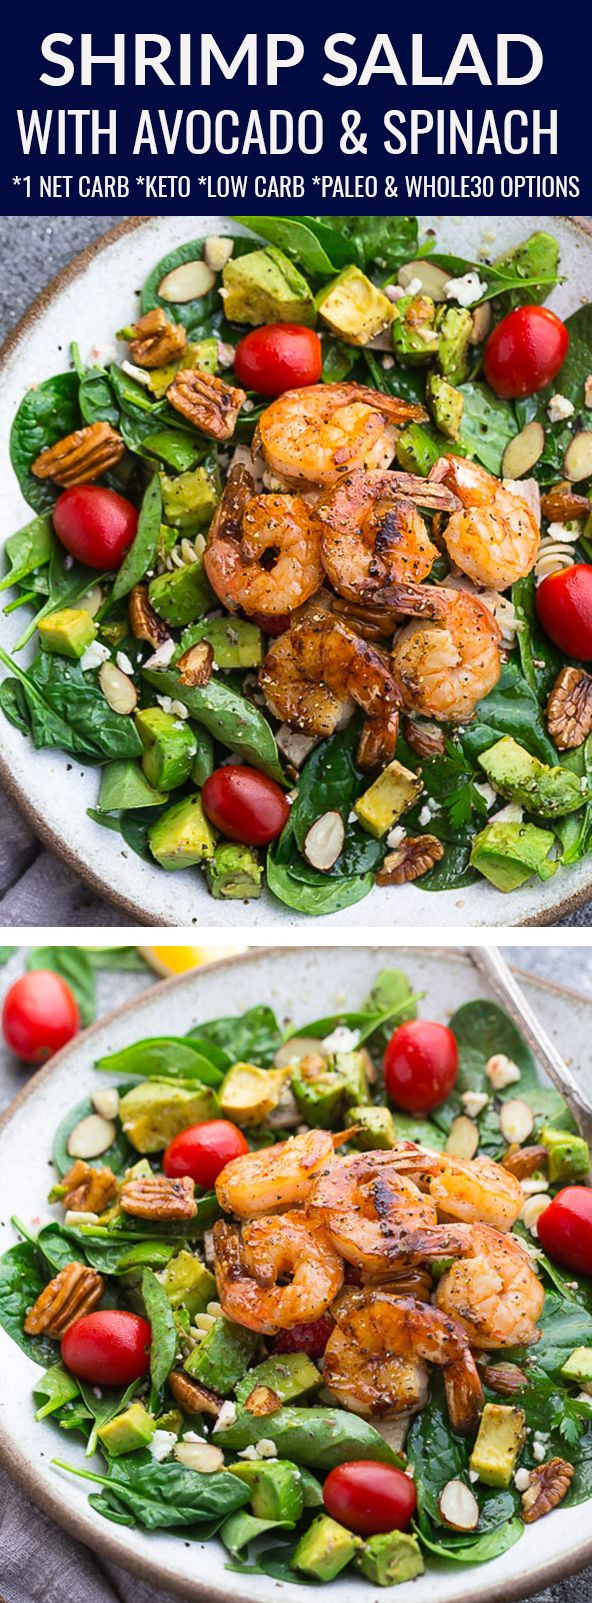 Recipes Using Salad Shrimp
 This Shrimp Salad is a healthy & flavorful dish perfect